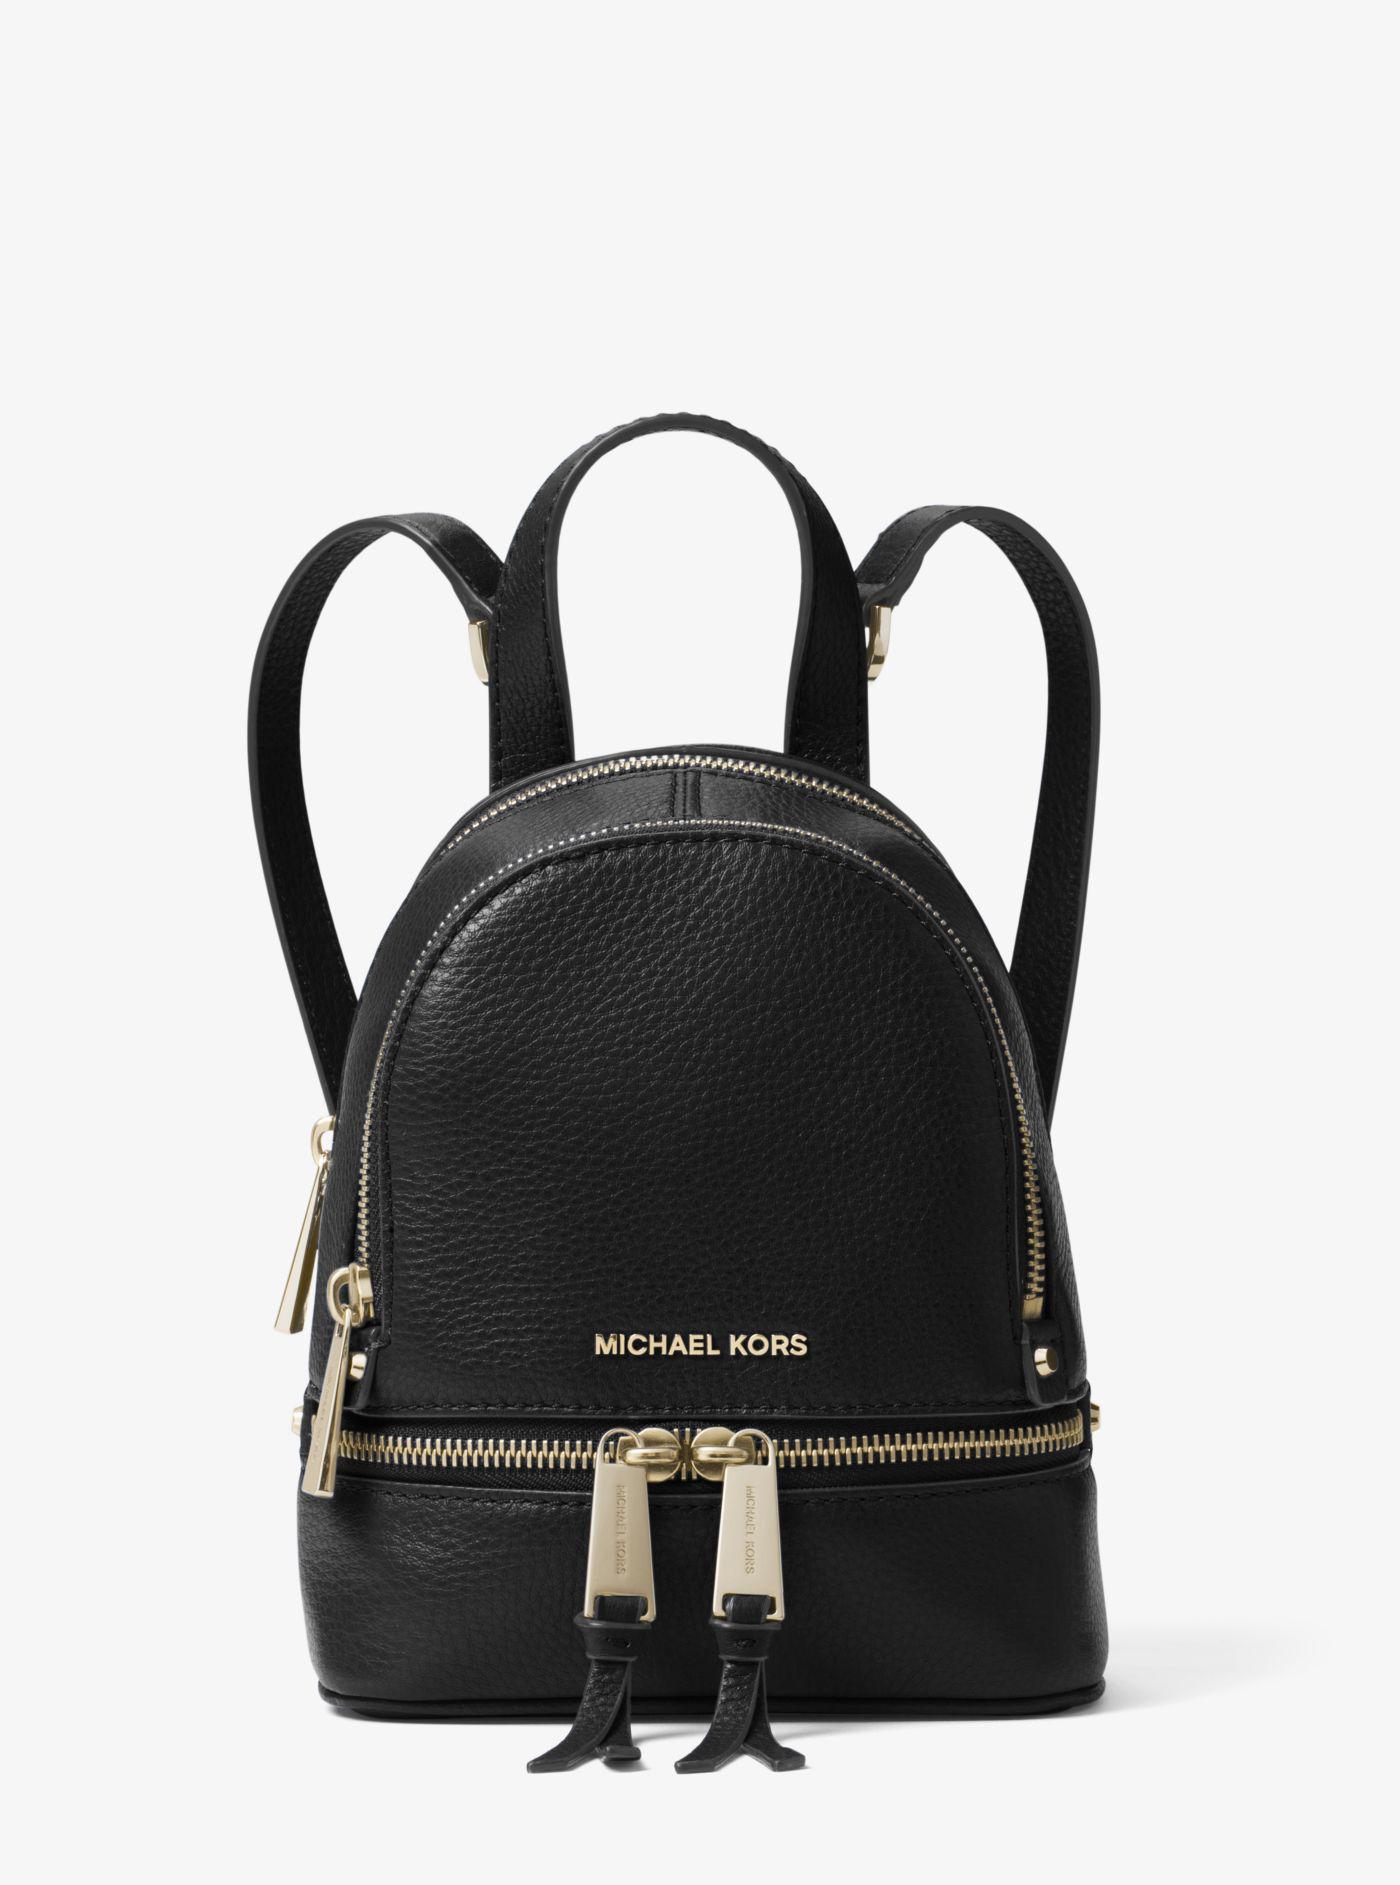 Michael Kors Jaycee XS Mini Convertible Zip Pocket Backpack Crossbody Brown  | eBay